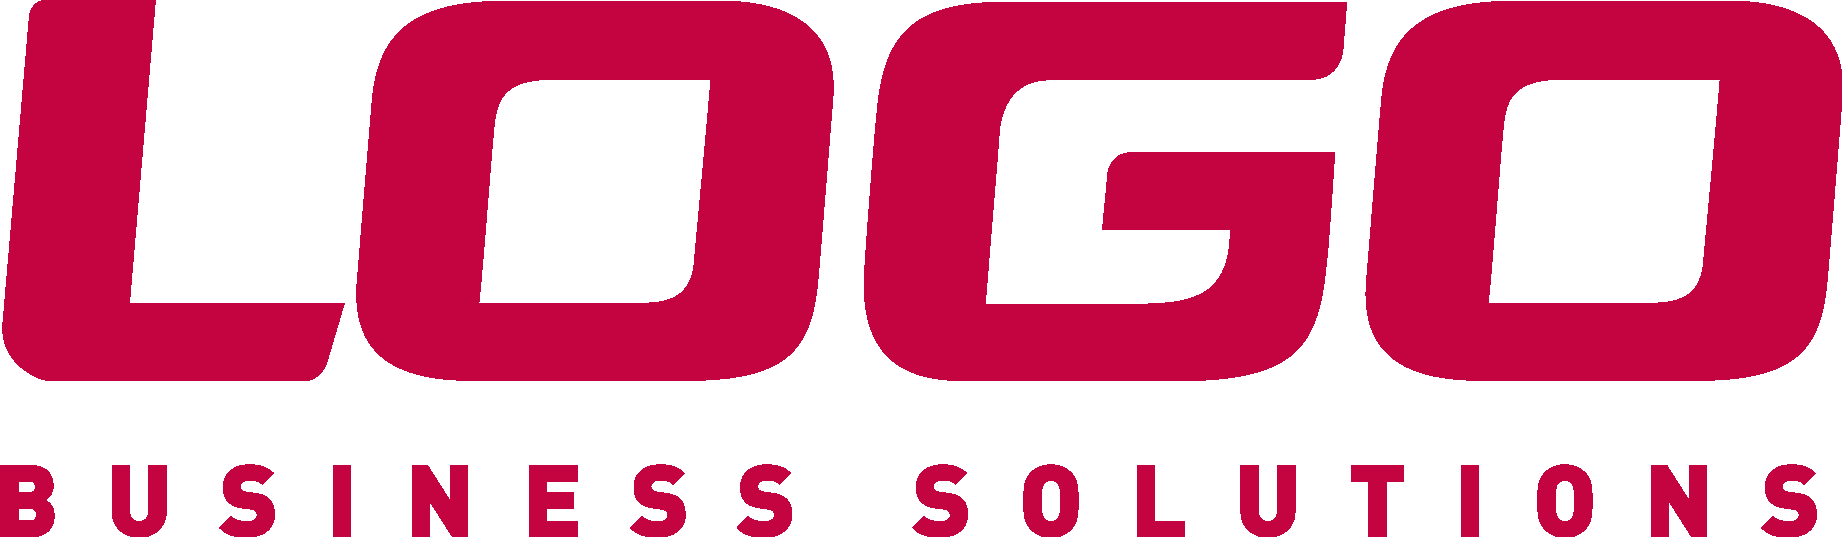 LOGO Business Solutions Logo Vector